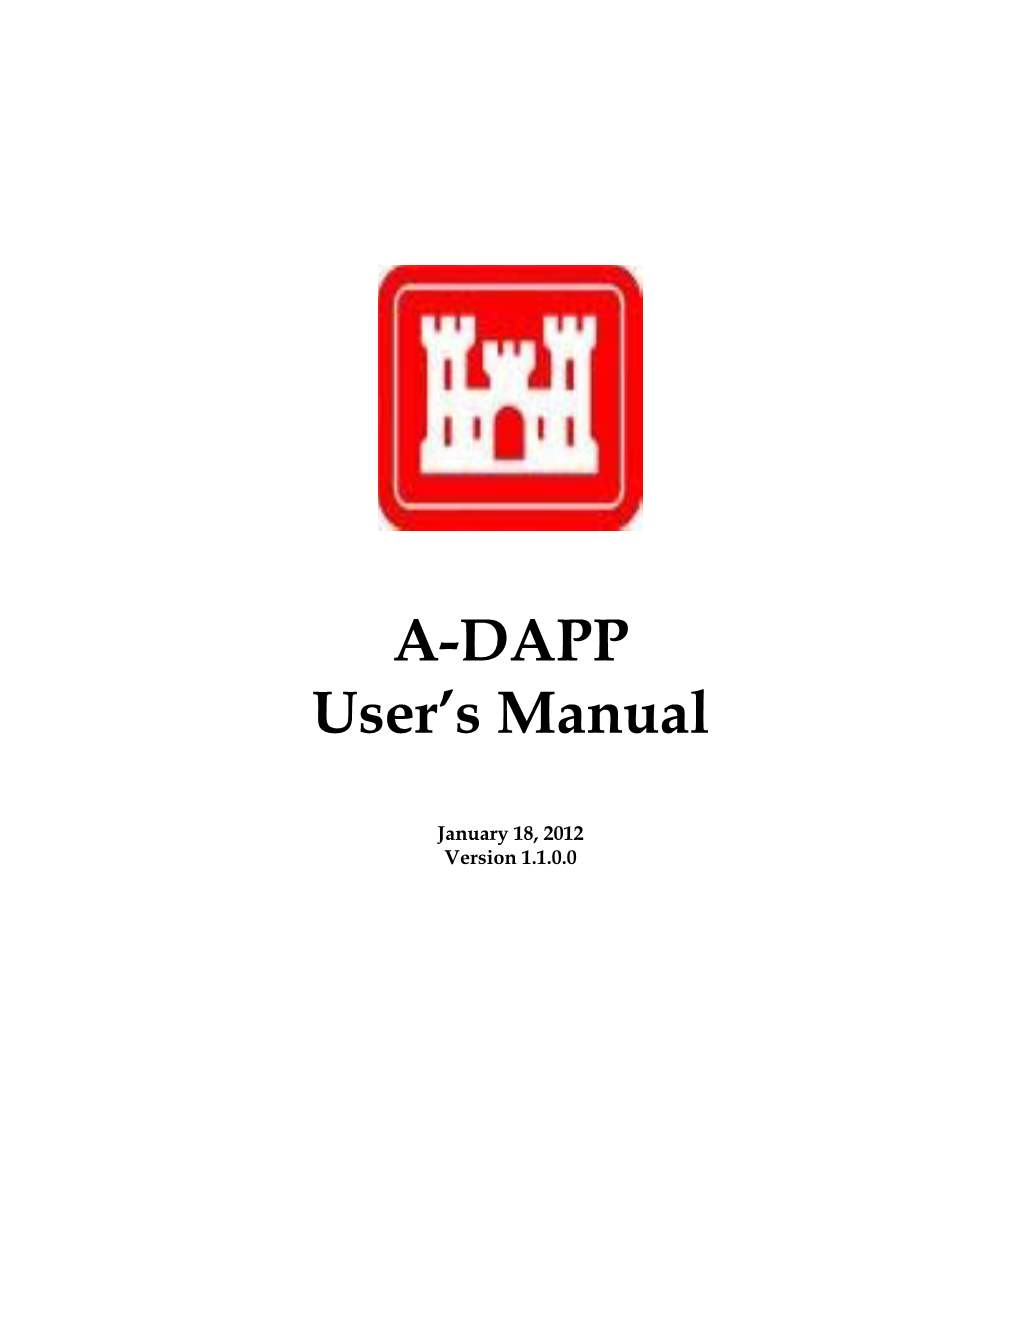 ADAPP User's Manual 1 1 0 0 20120118